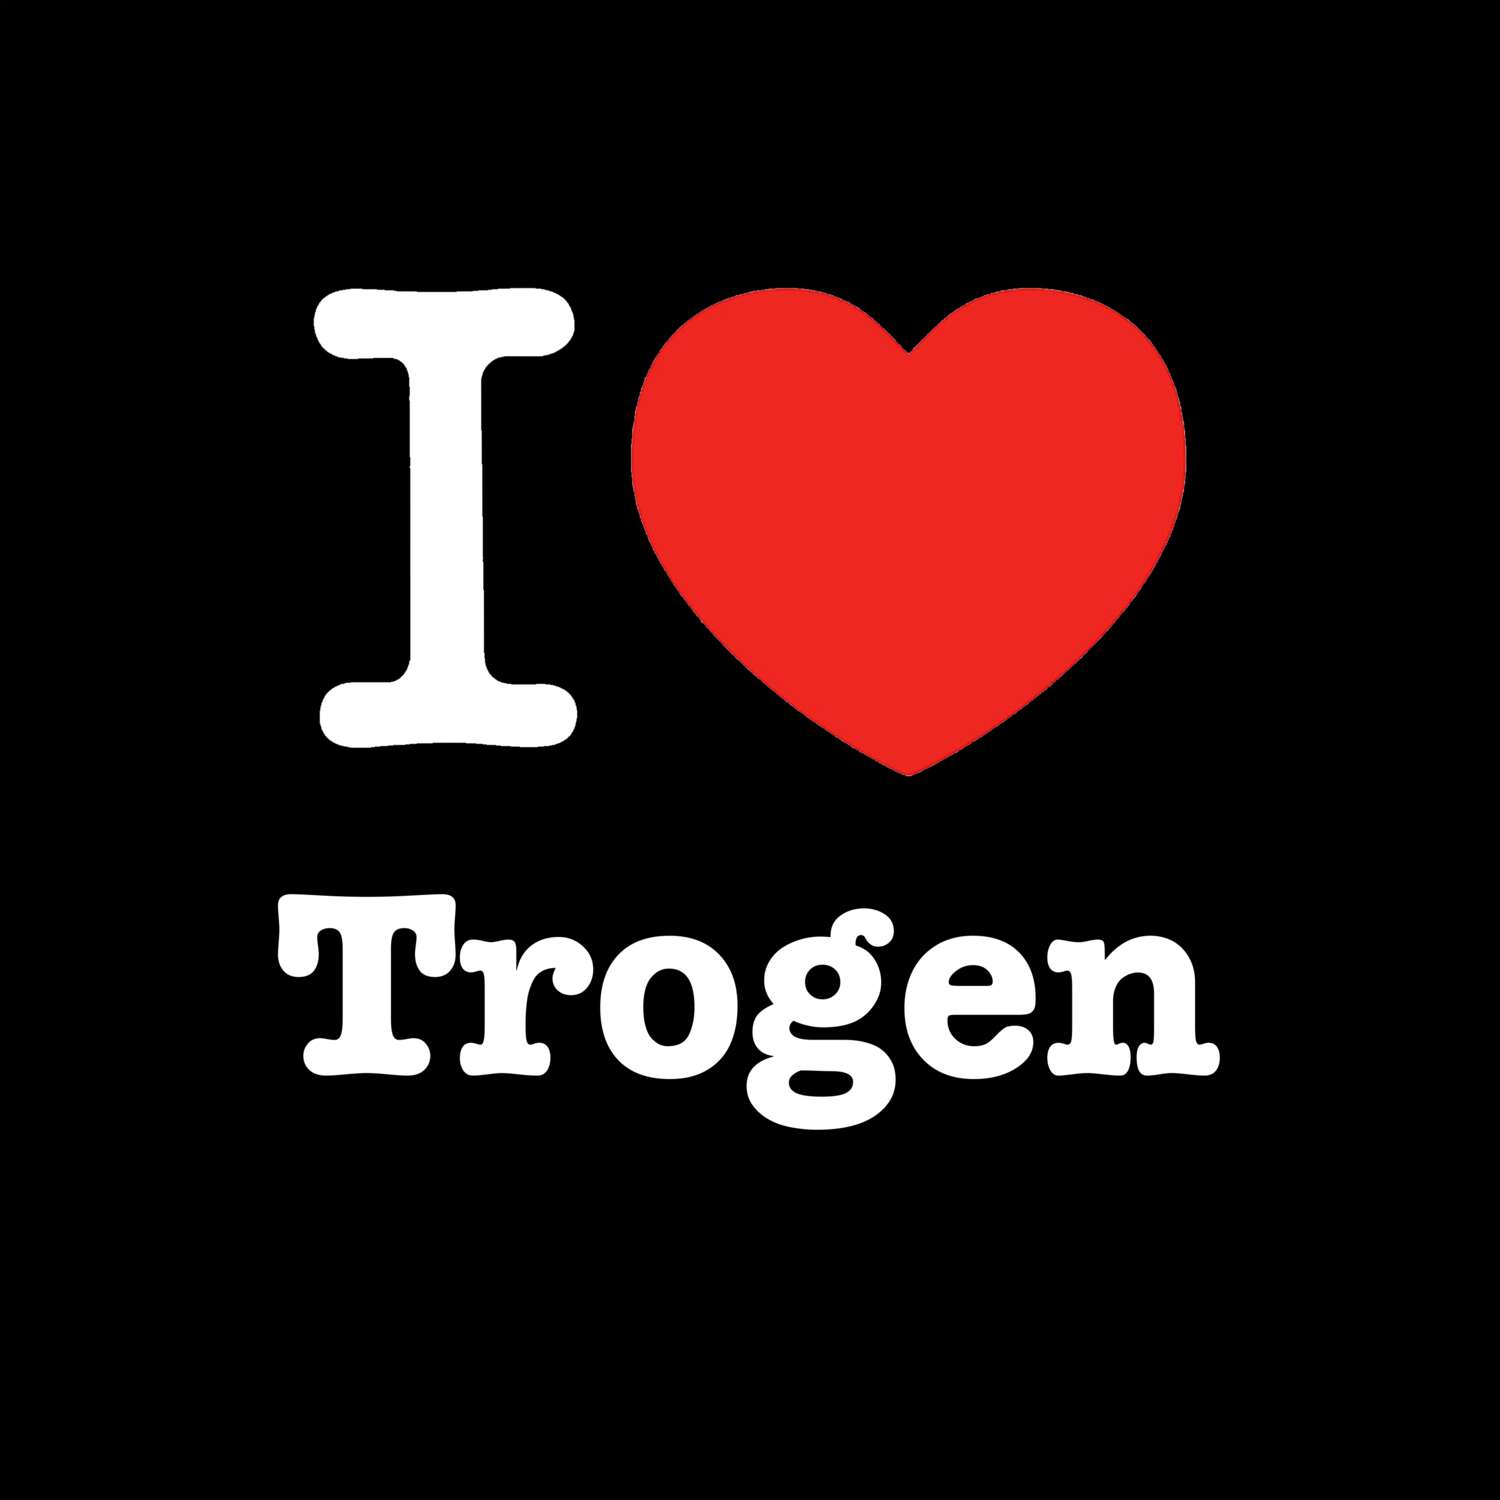 Trogen T-Shirt »I love«